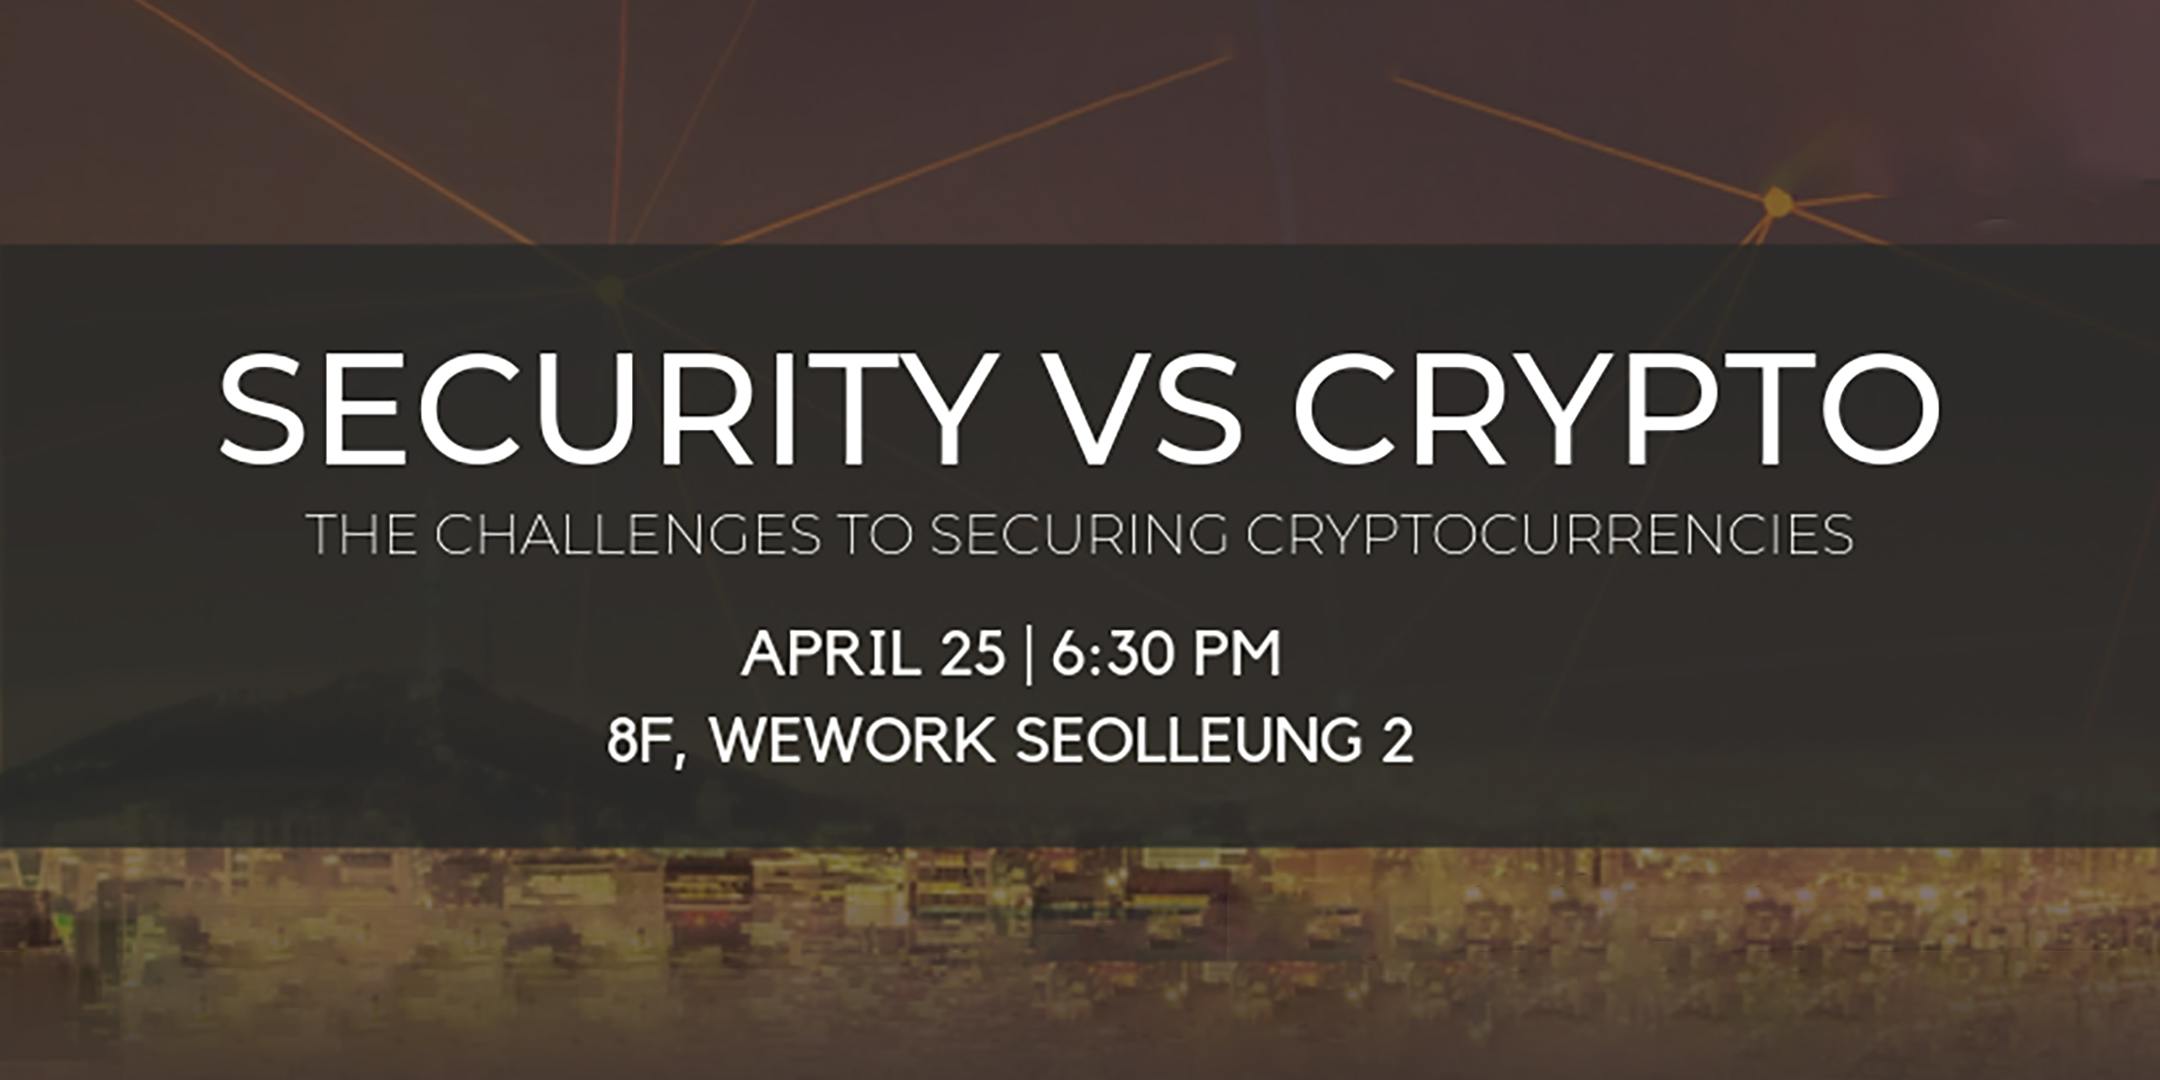 SECURITY VS CRYPTO